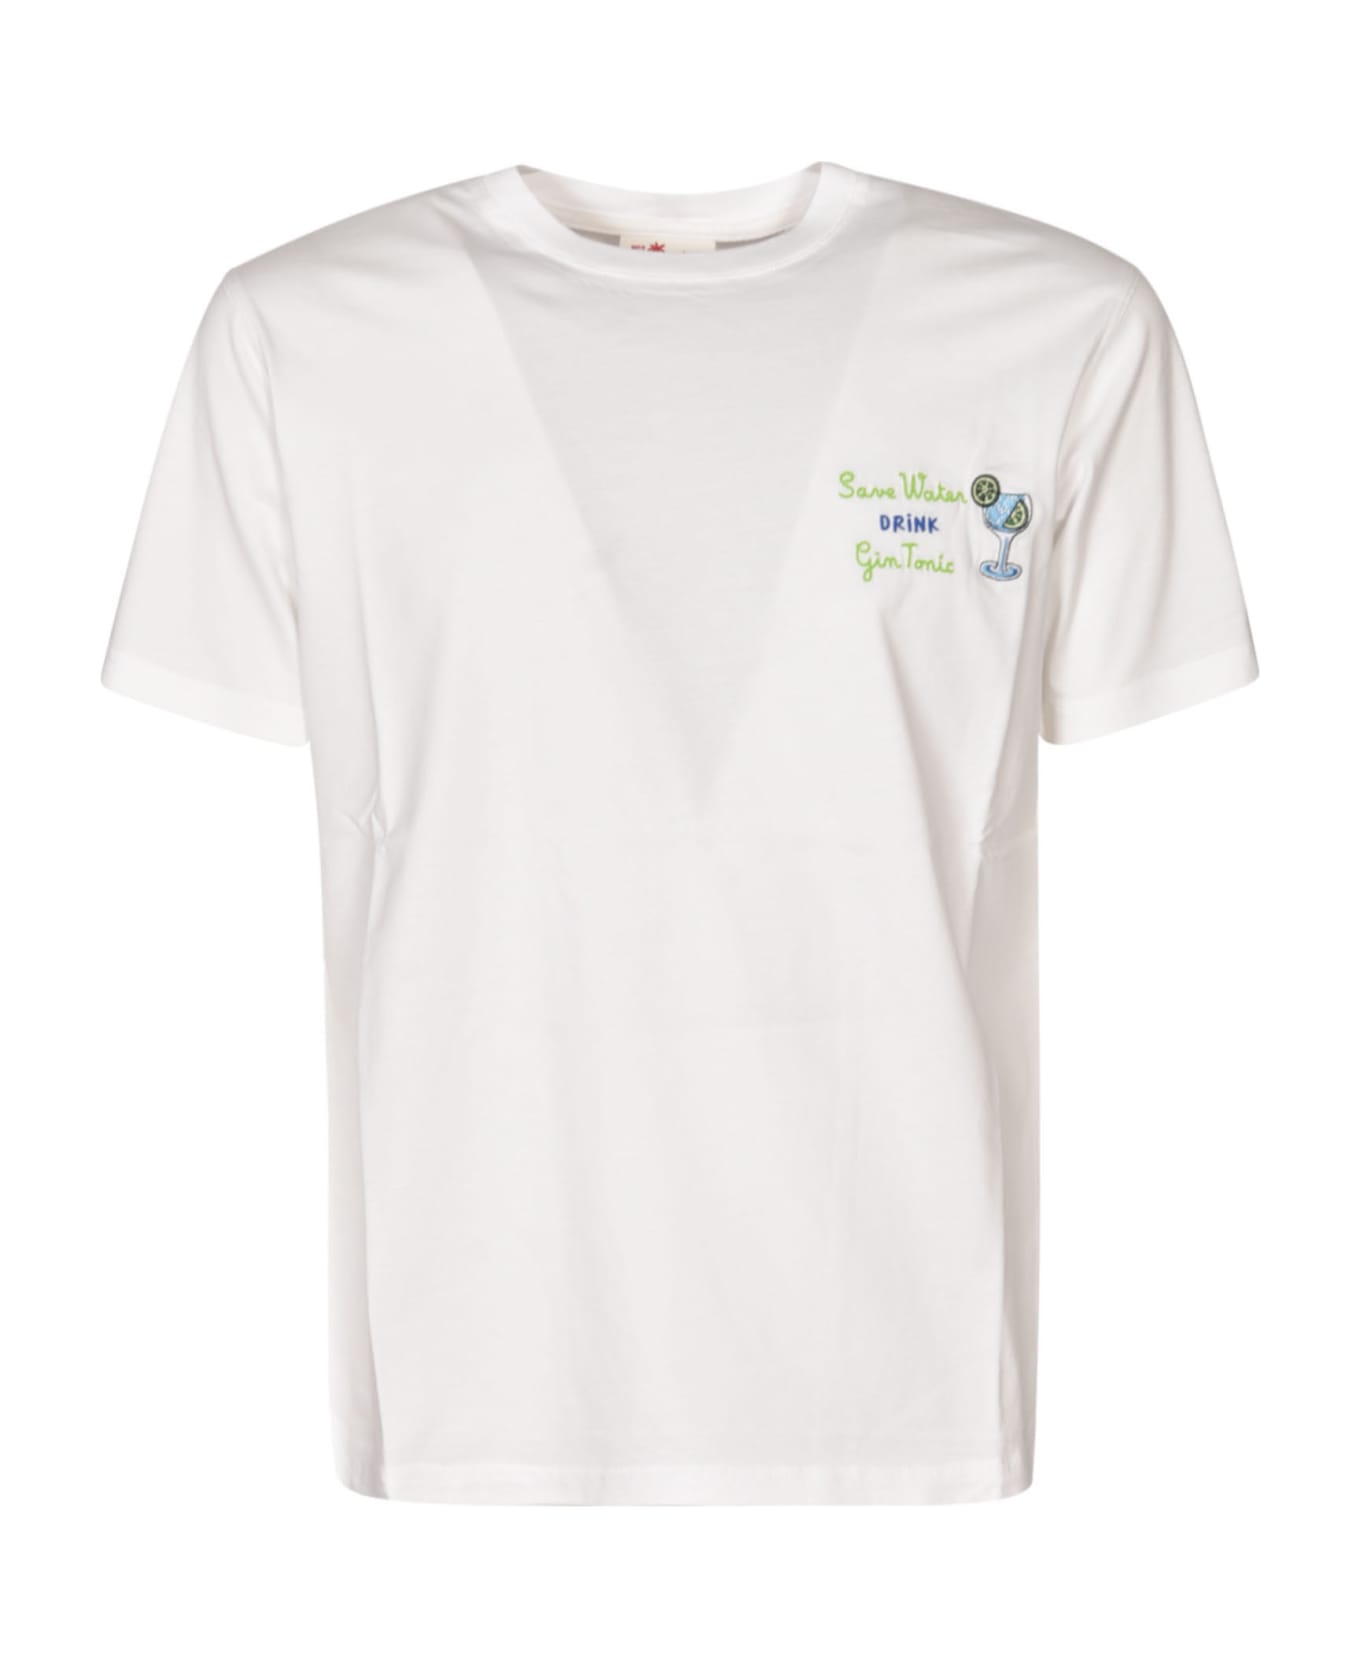 MC2 Saint Barth Portofino T-shirt - Drink gin save